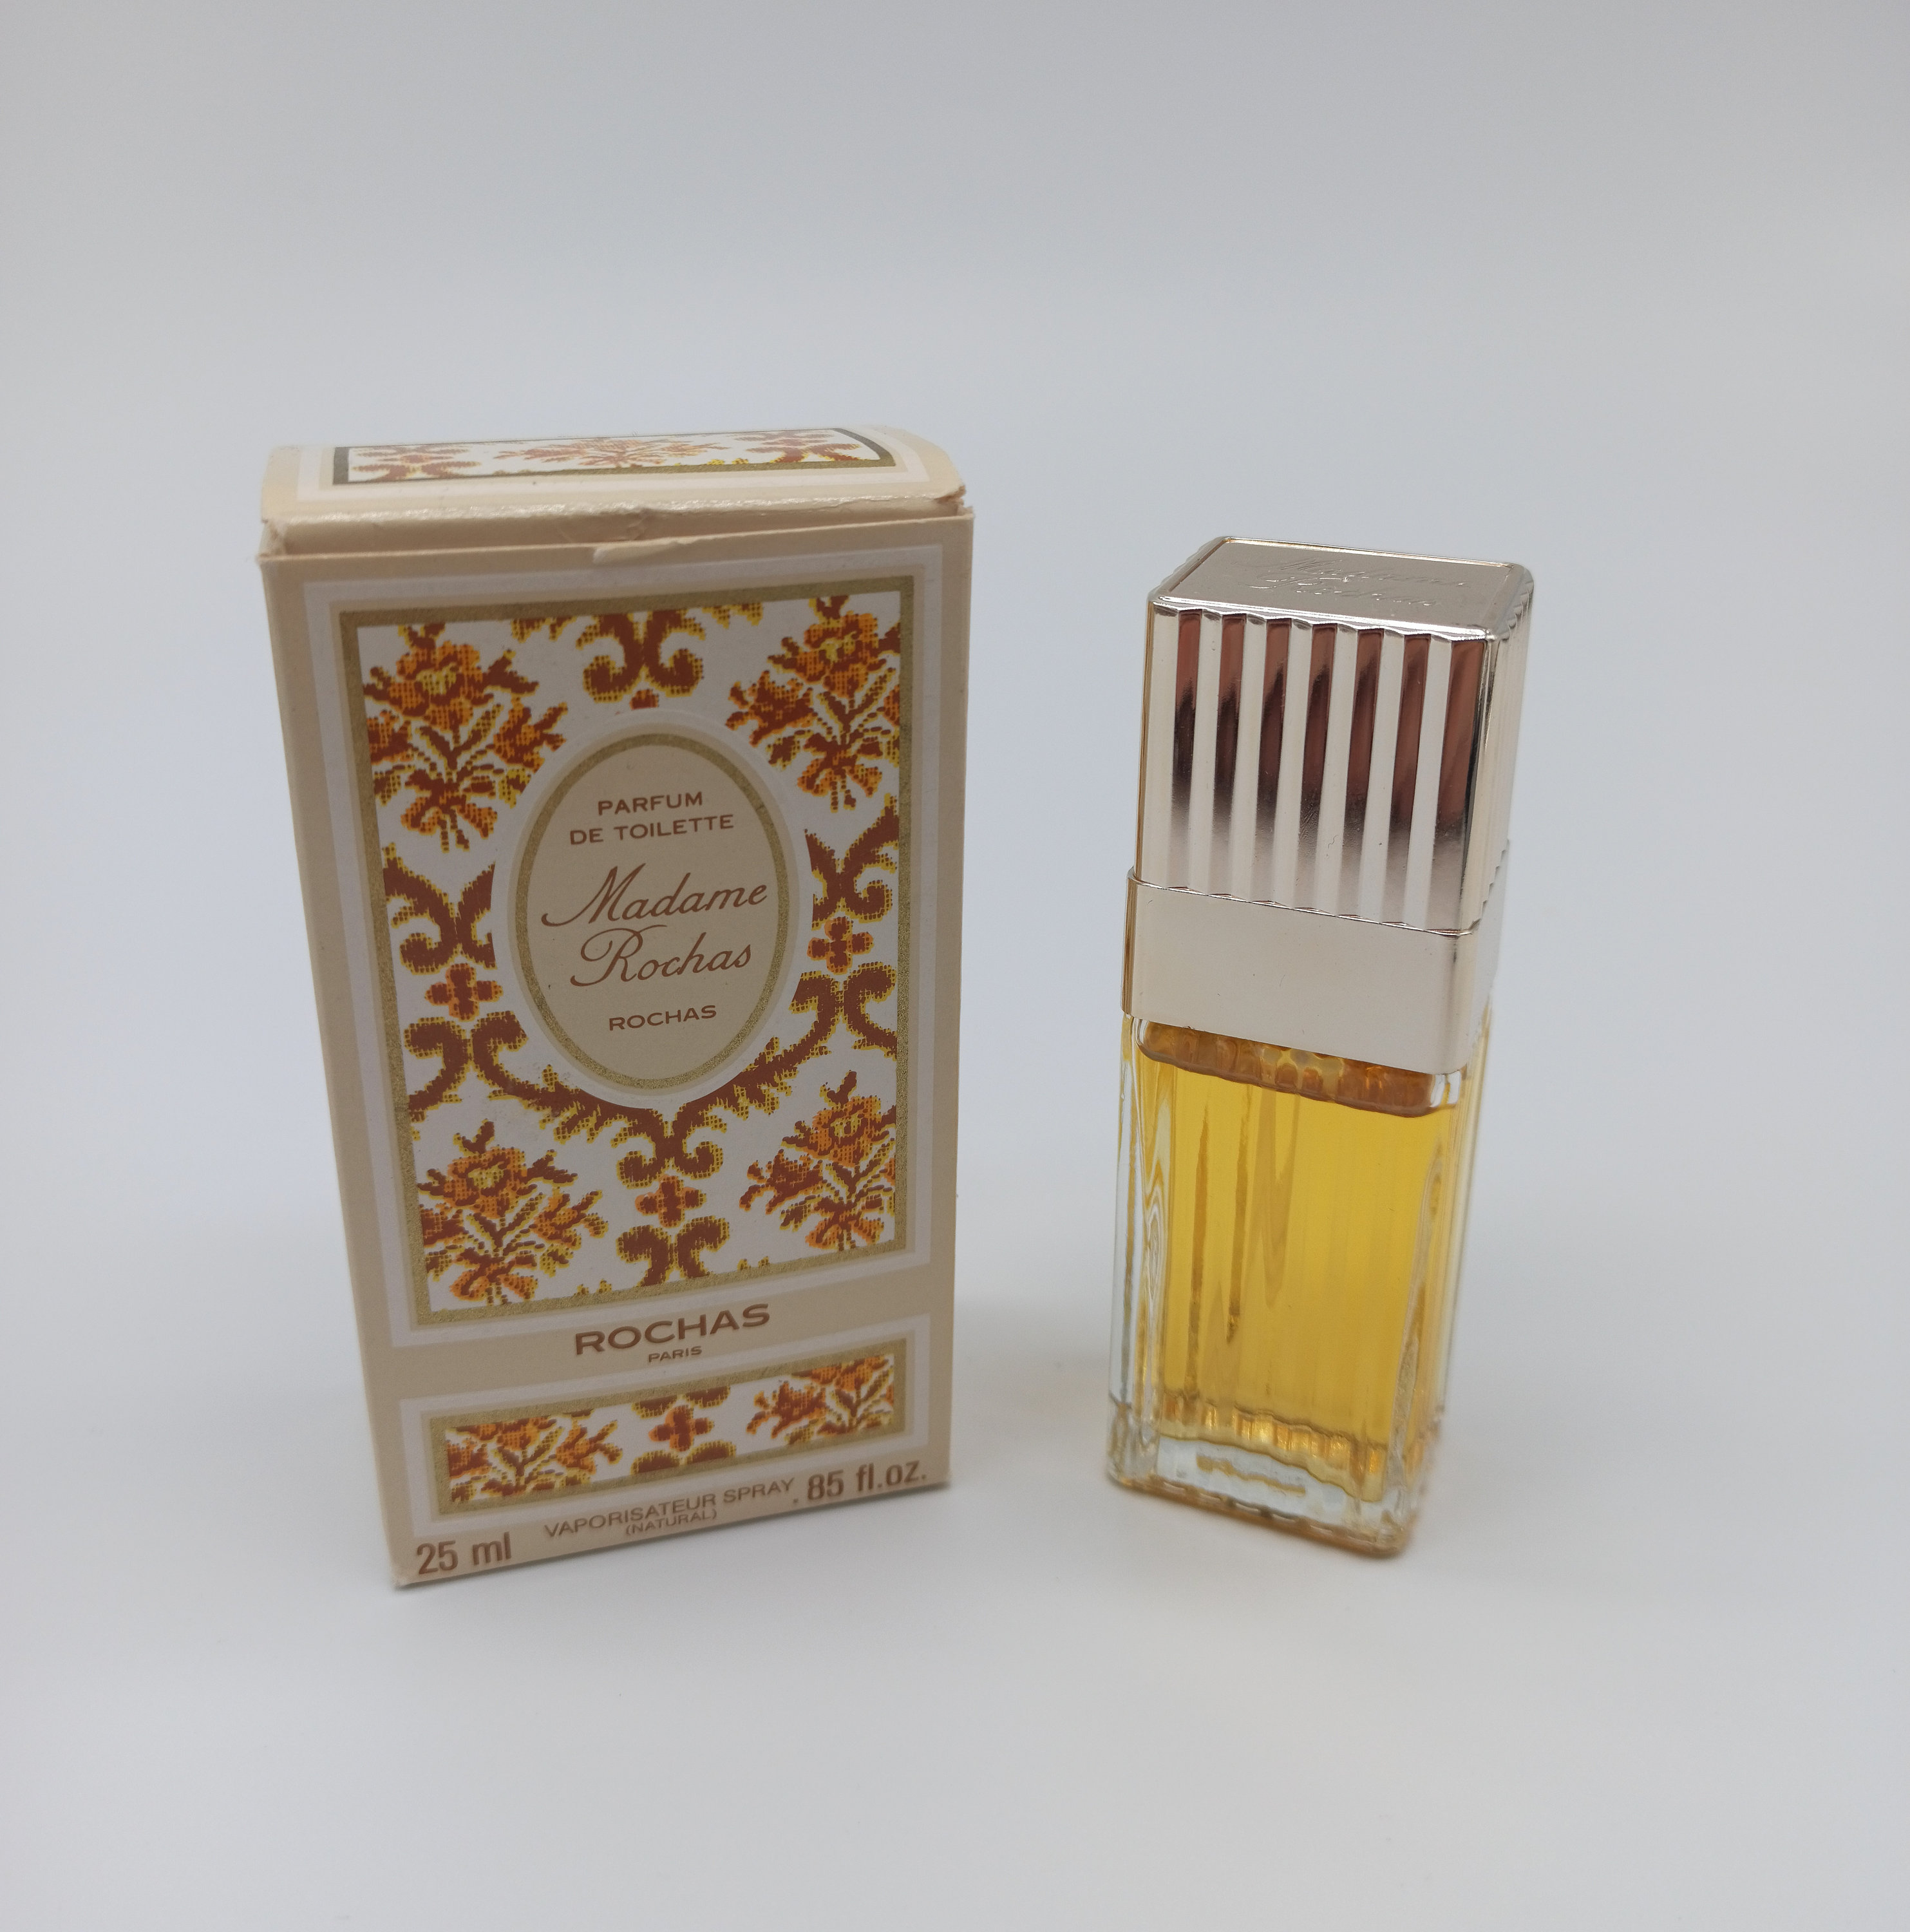 Rochas Madame Rochas Parfum De Toilette 25ml Vintage - Etsy